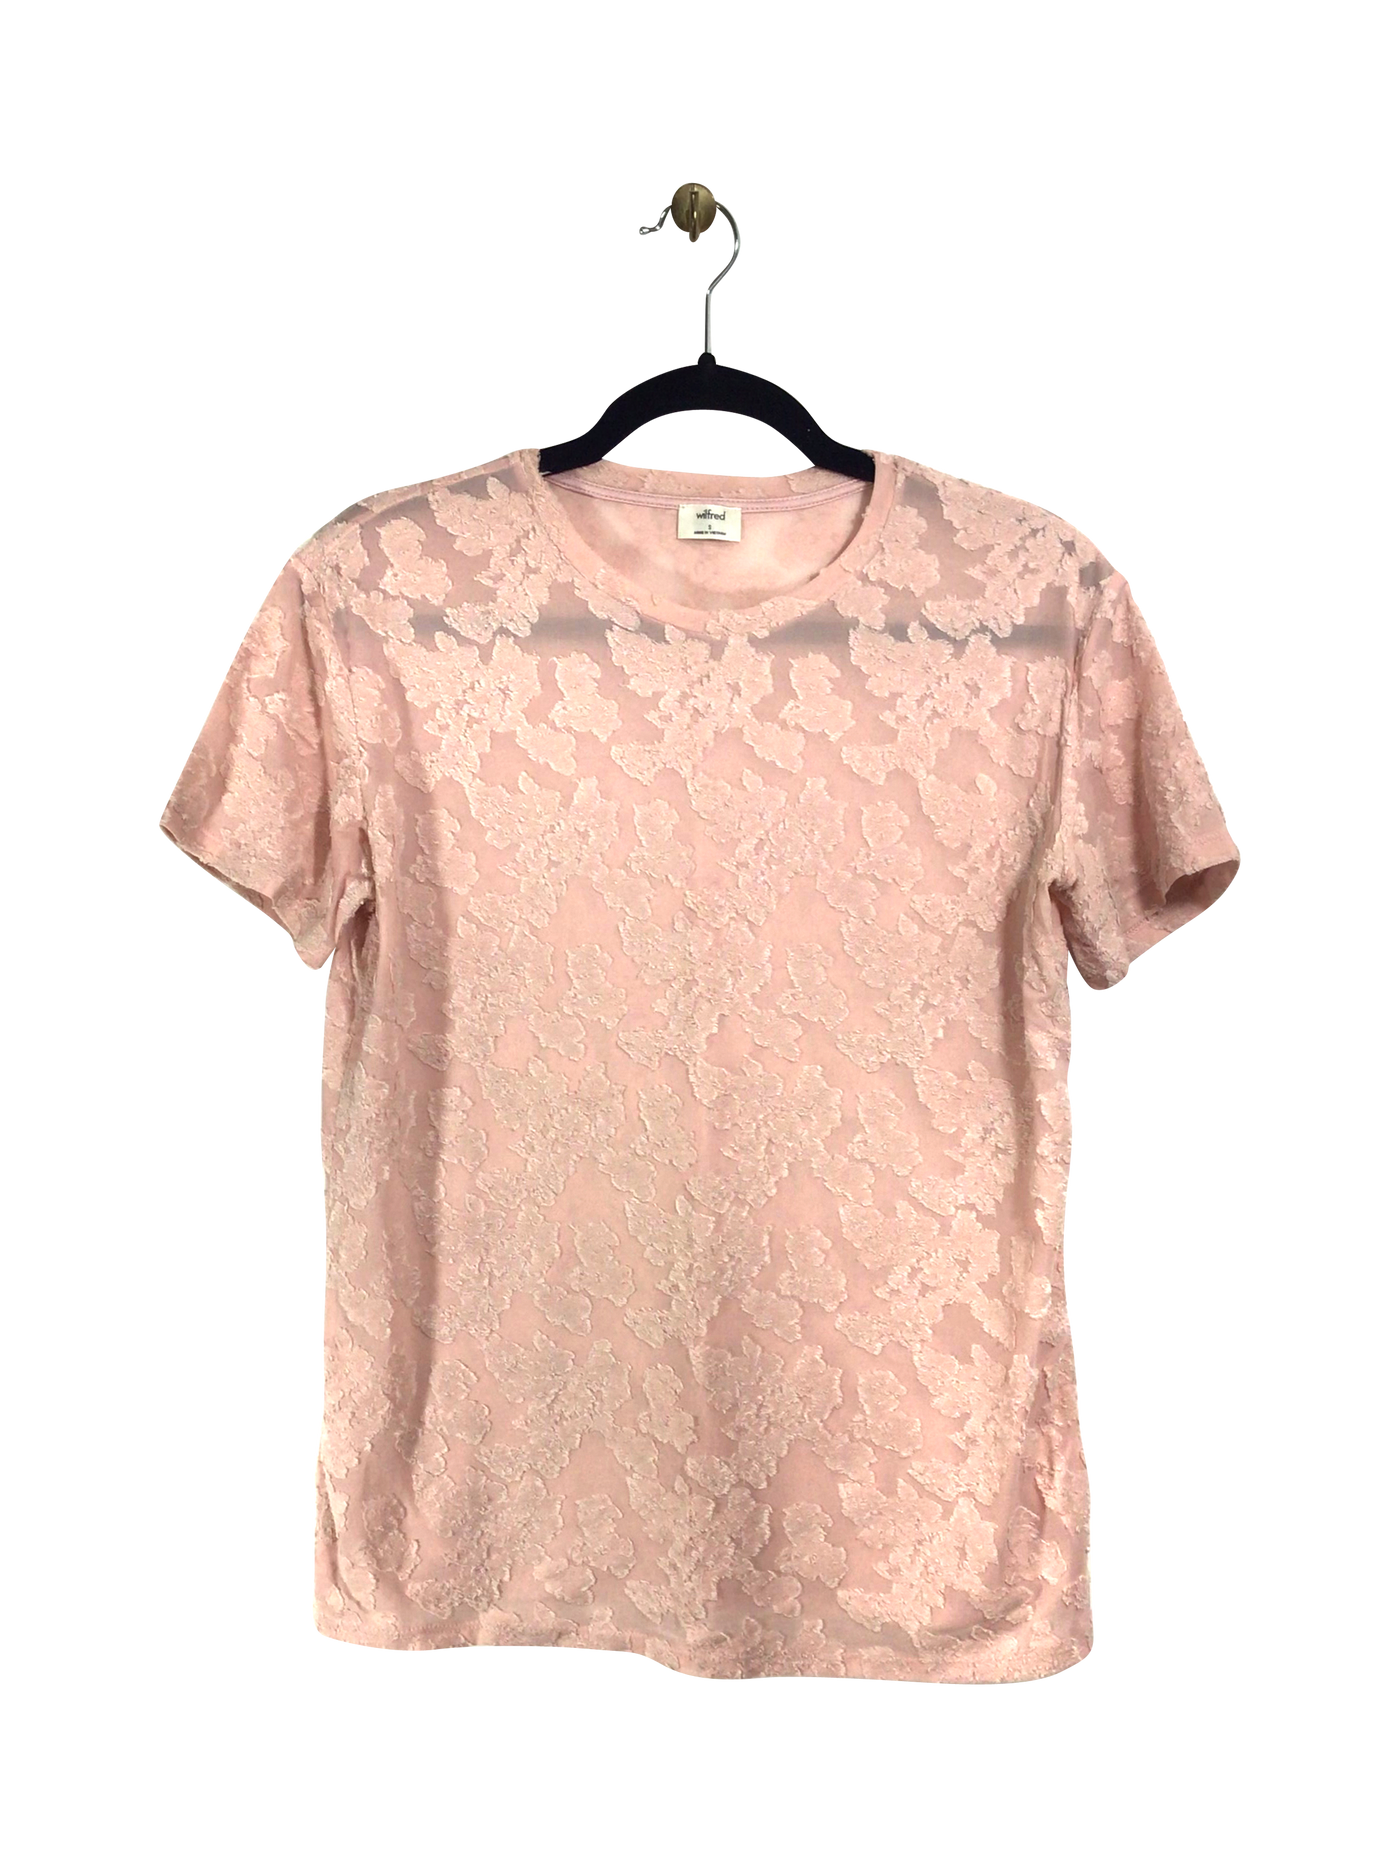 WILFRED T-shirt Regular fit in Pink - Size S | 14 $ KOOP